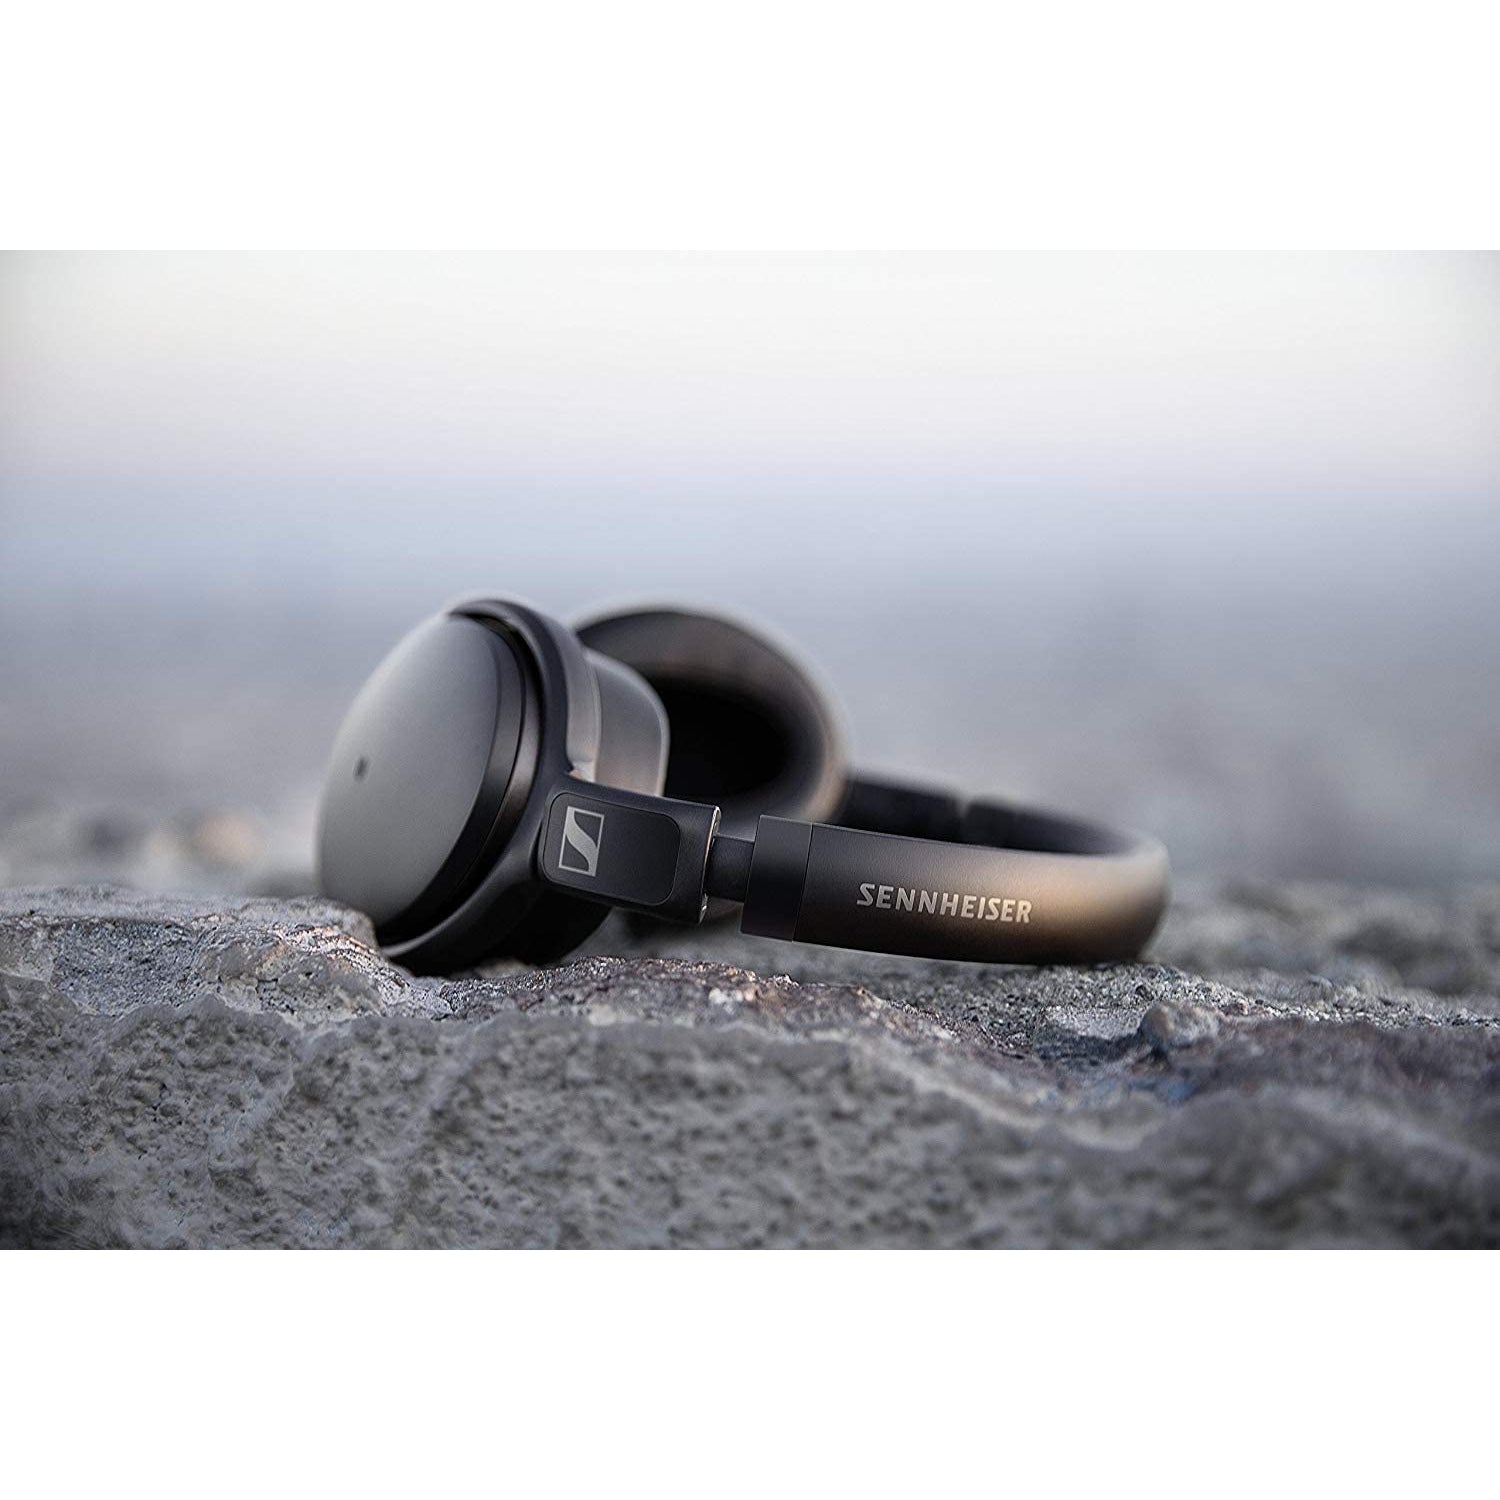 Sennheiser HD 4.50 BTNC, Wireless Headphone with Active Noise Cancellation, Black, Refurbished